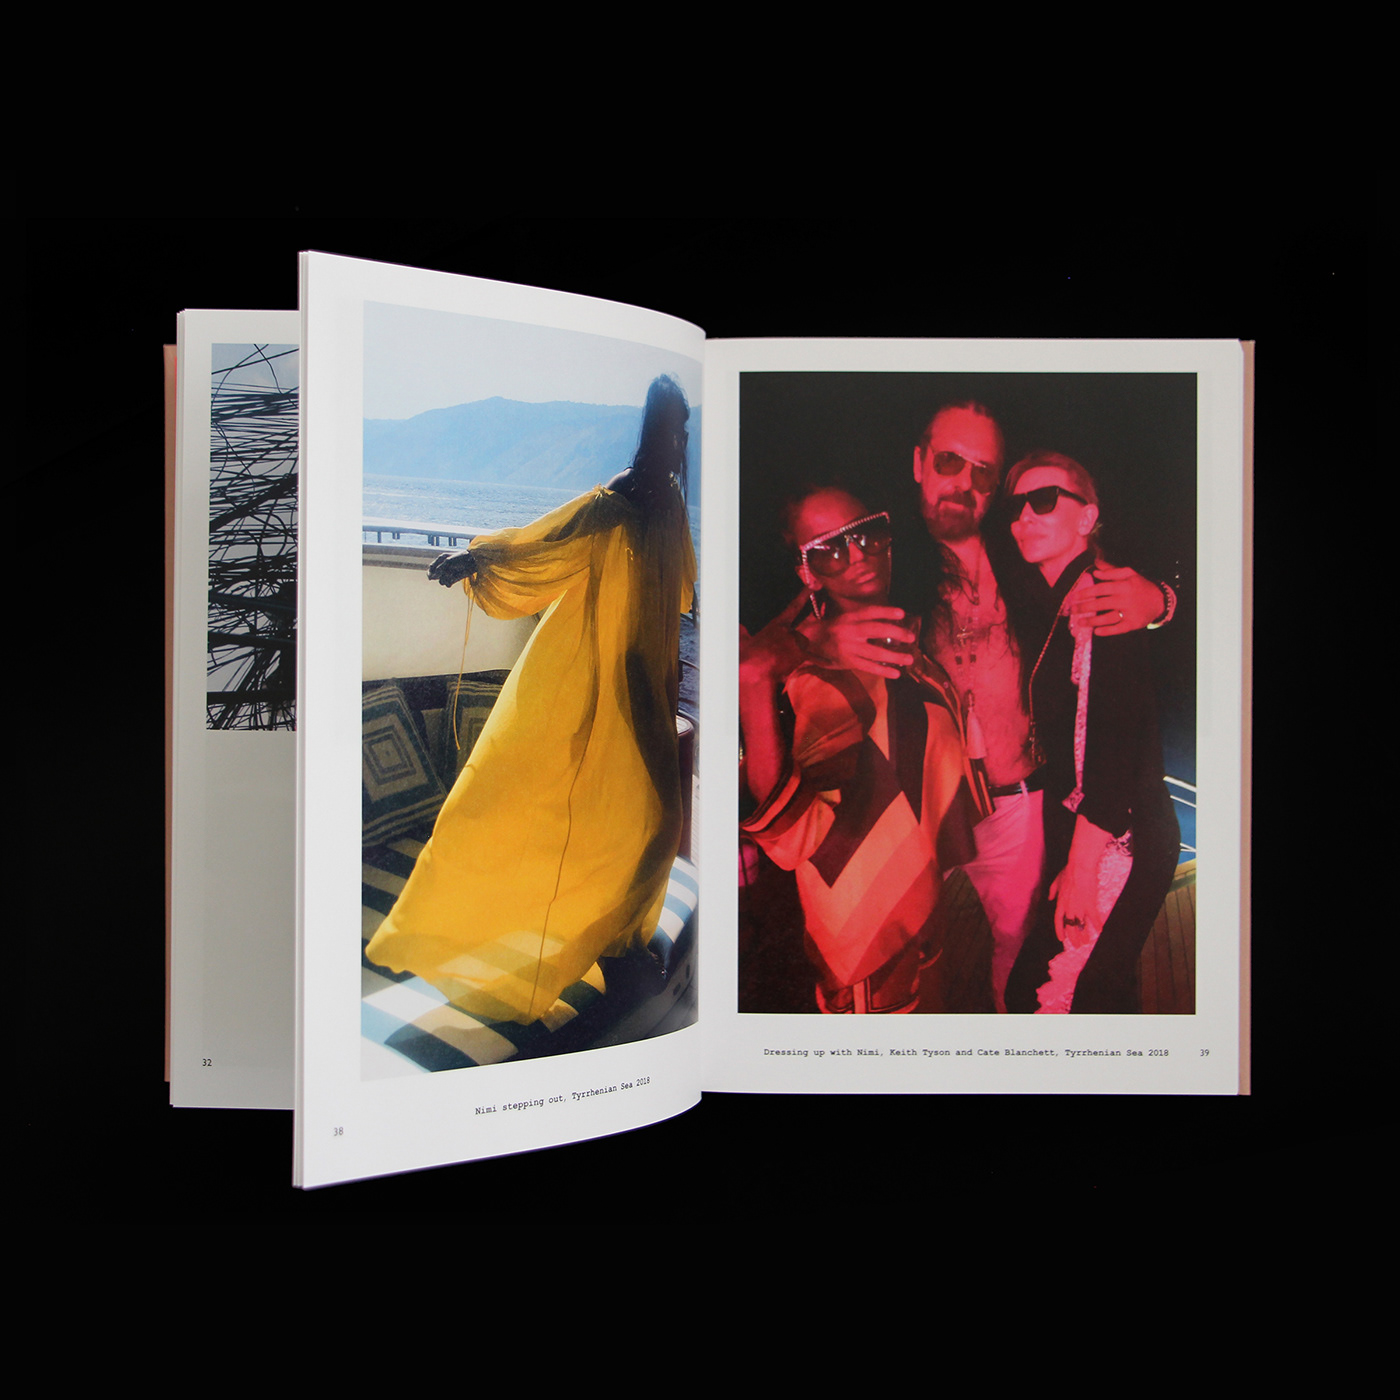 Anton Corbijn Bookdesign coverdesign hotfoil instagram music nick cave phone photos photobook Photography 